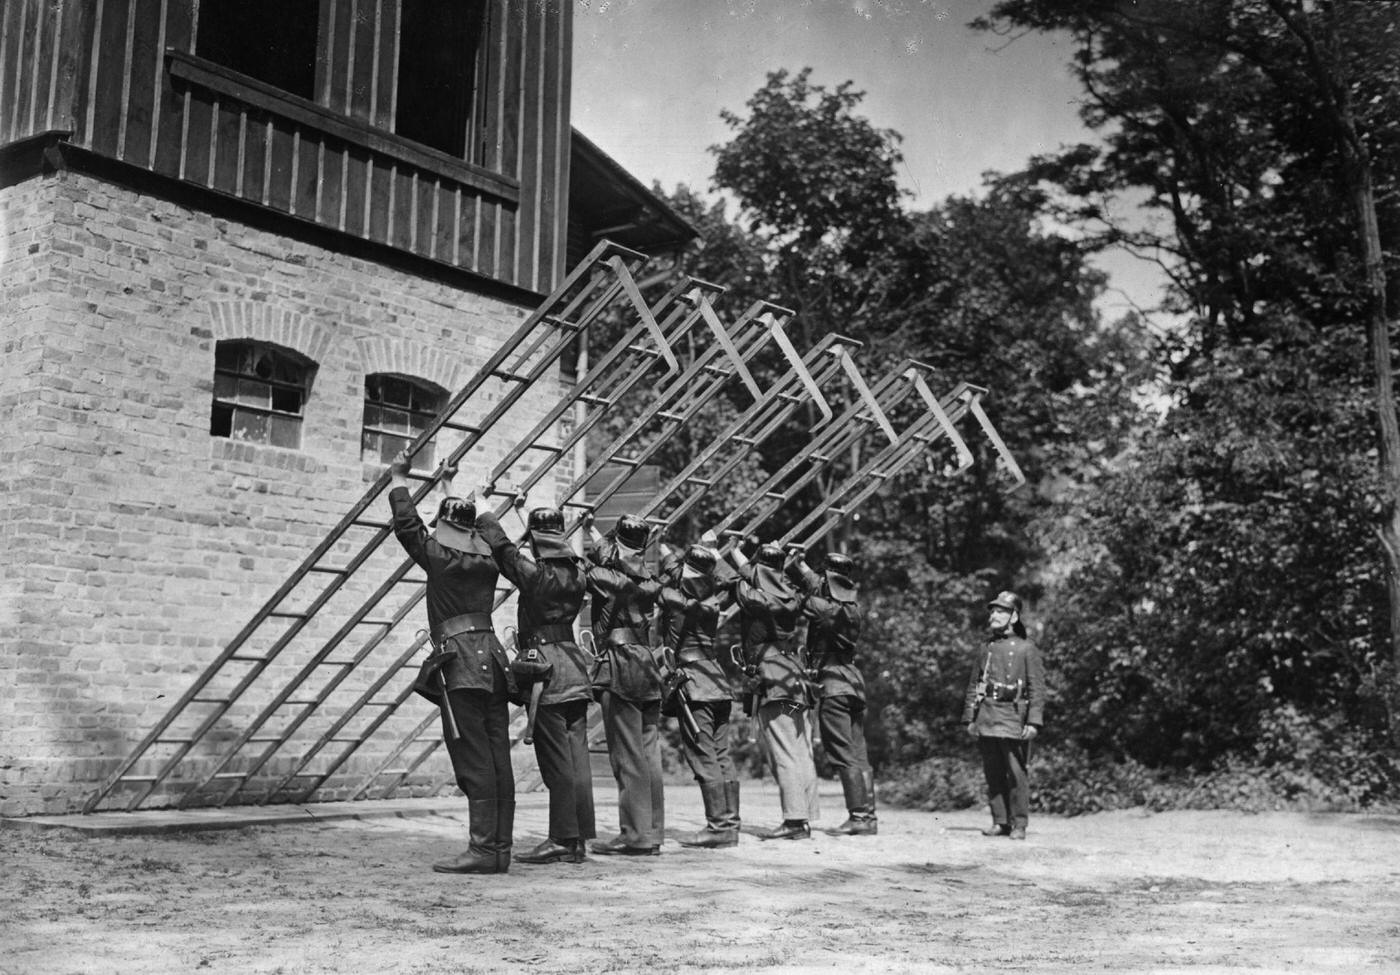 Righting Ladders, Berlin, 1930